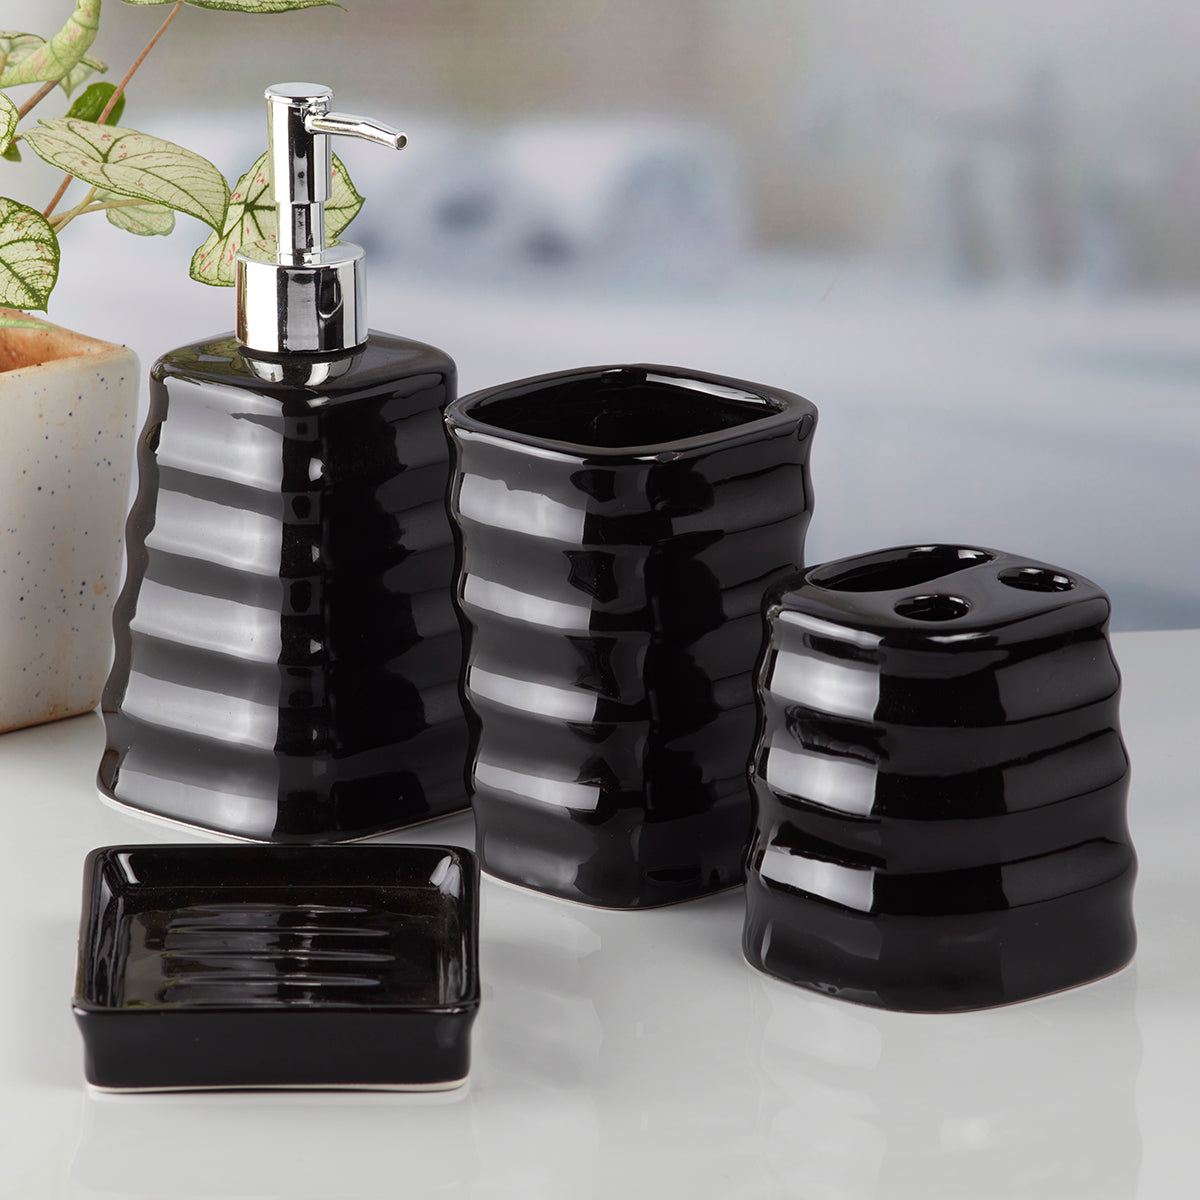 Ceramic Bathroom Accessories Set of 4 Bath Set with Soap Dispenser (10109)